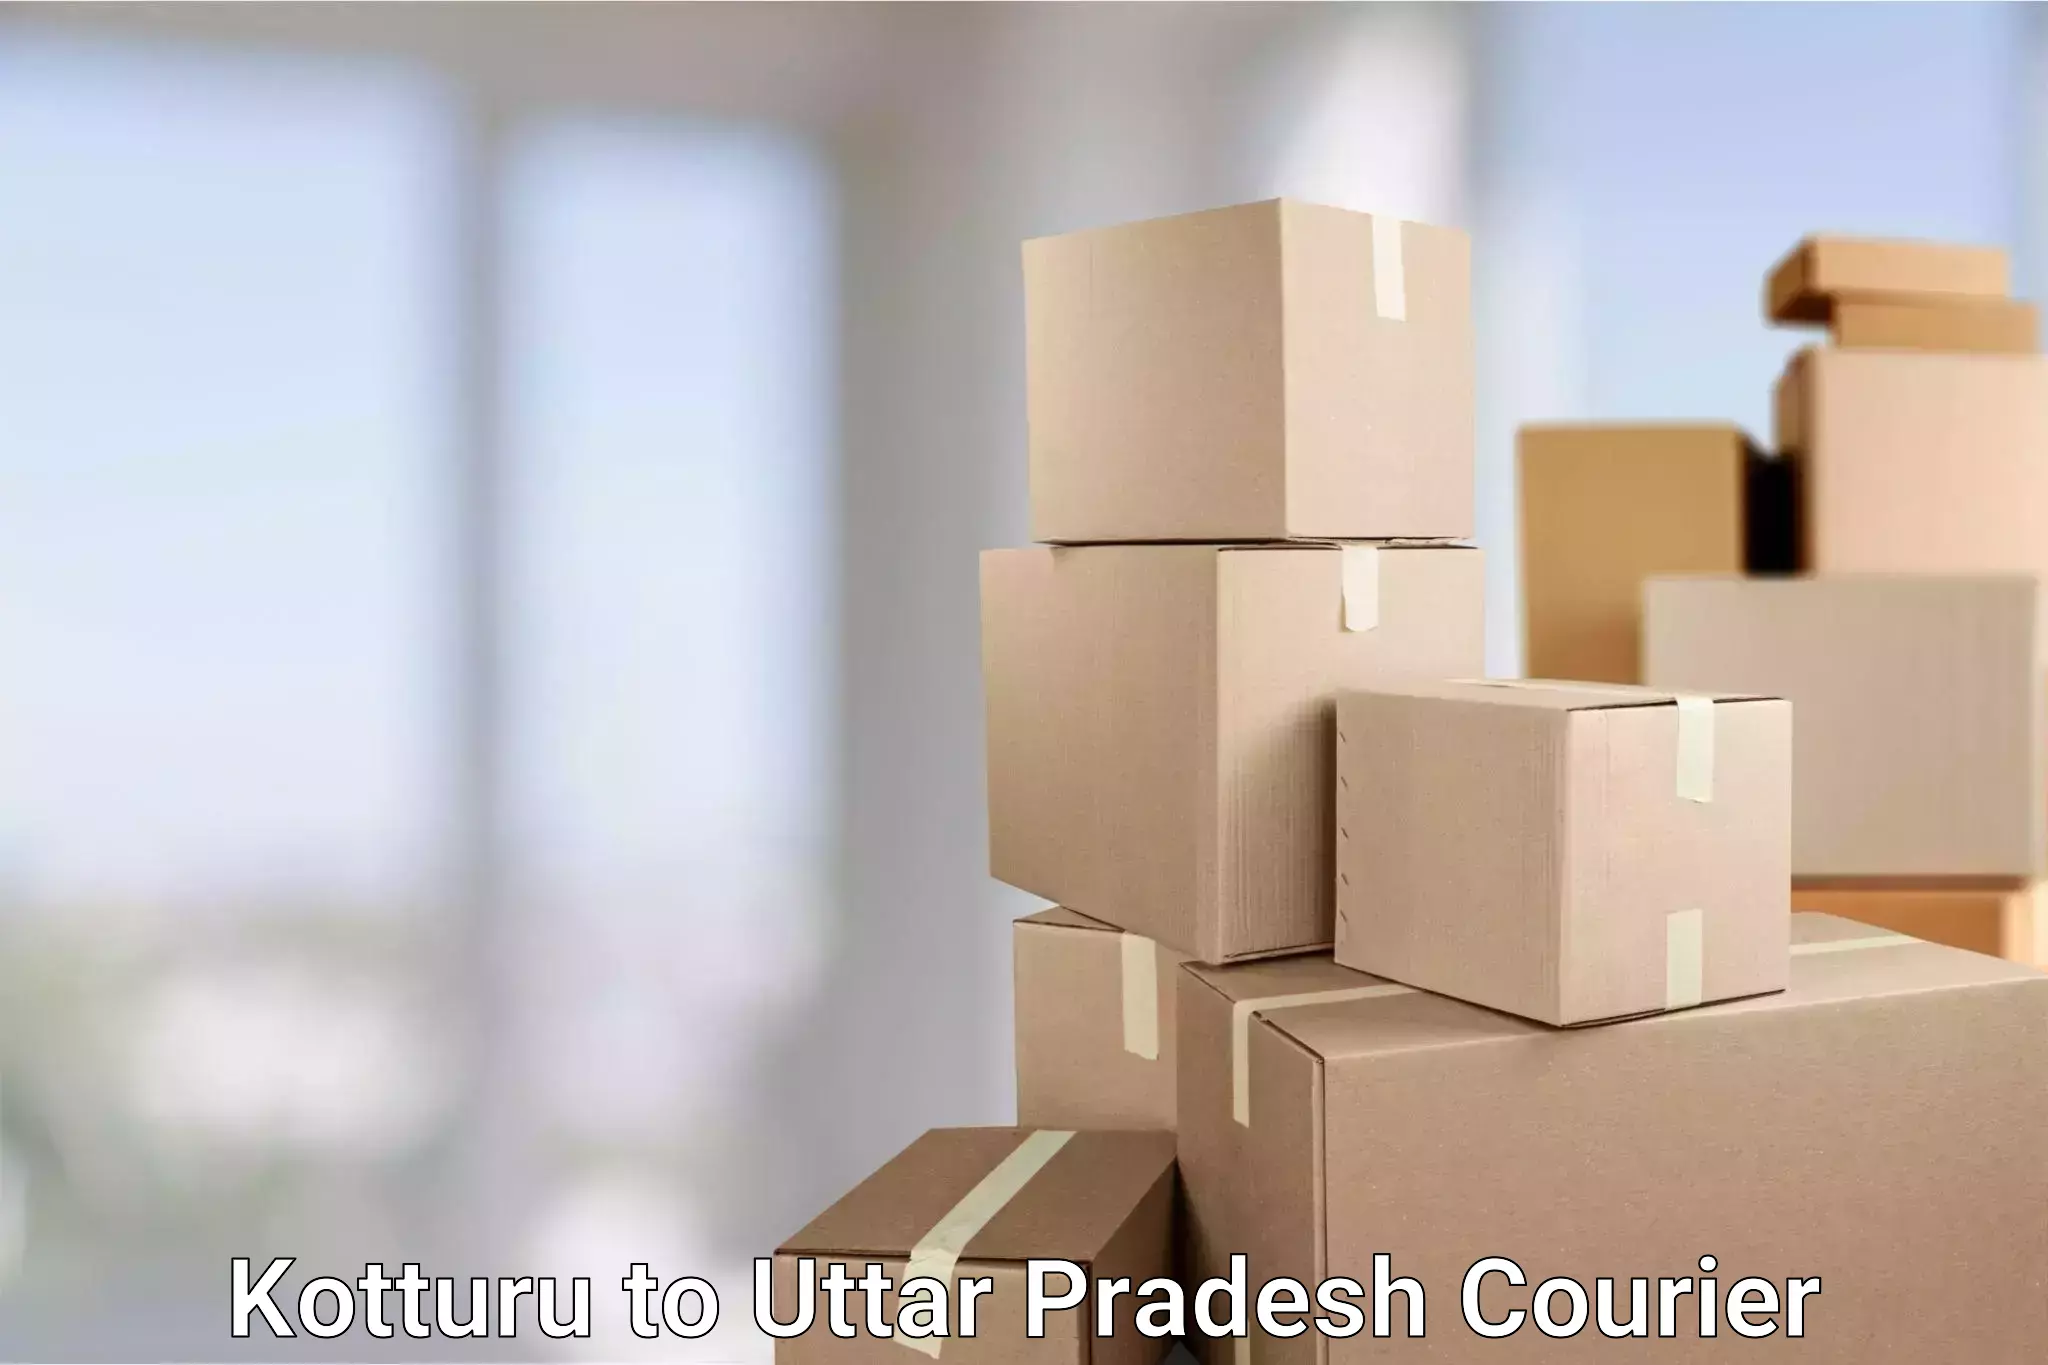 Express shipping Kotturu to Uttar Pradesh